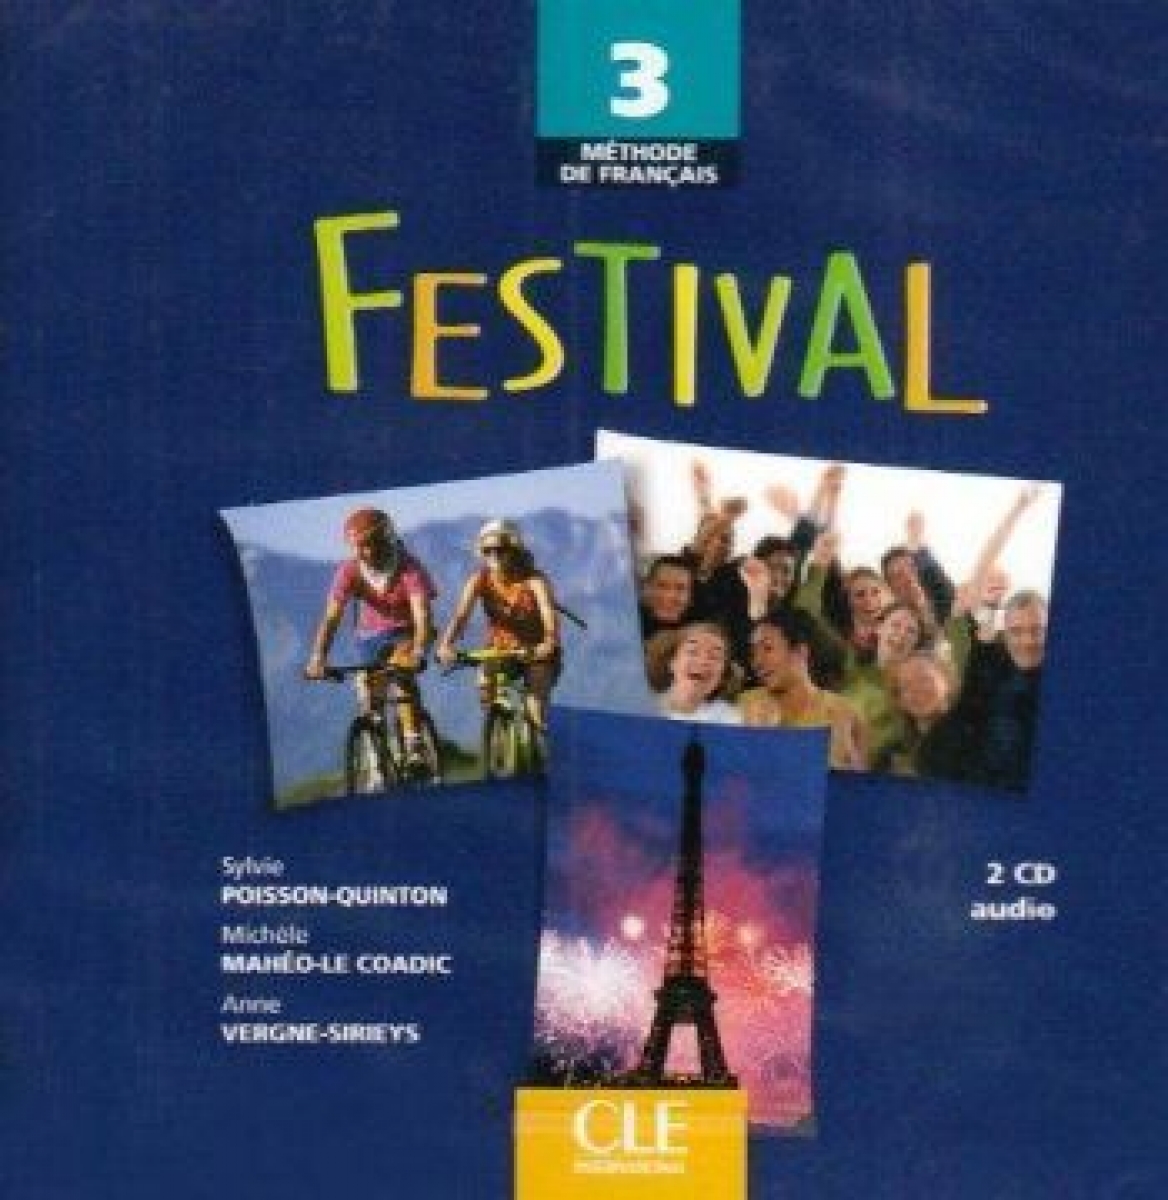 Sylvie Poisson-Quinton, Michele Maheo-Le Coadic, Anne Sirieys Festival 3 - CD audio collectifs (2) () 